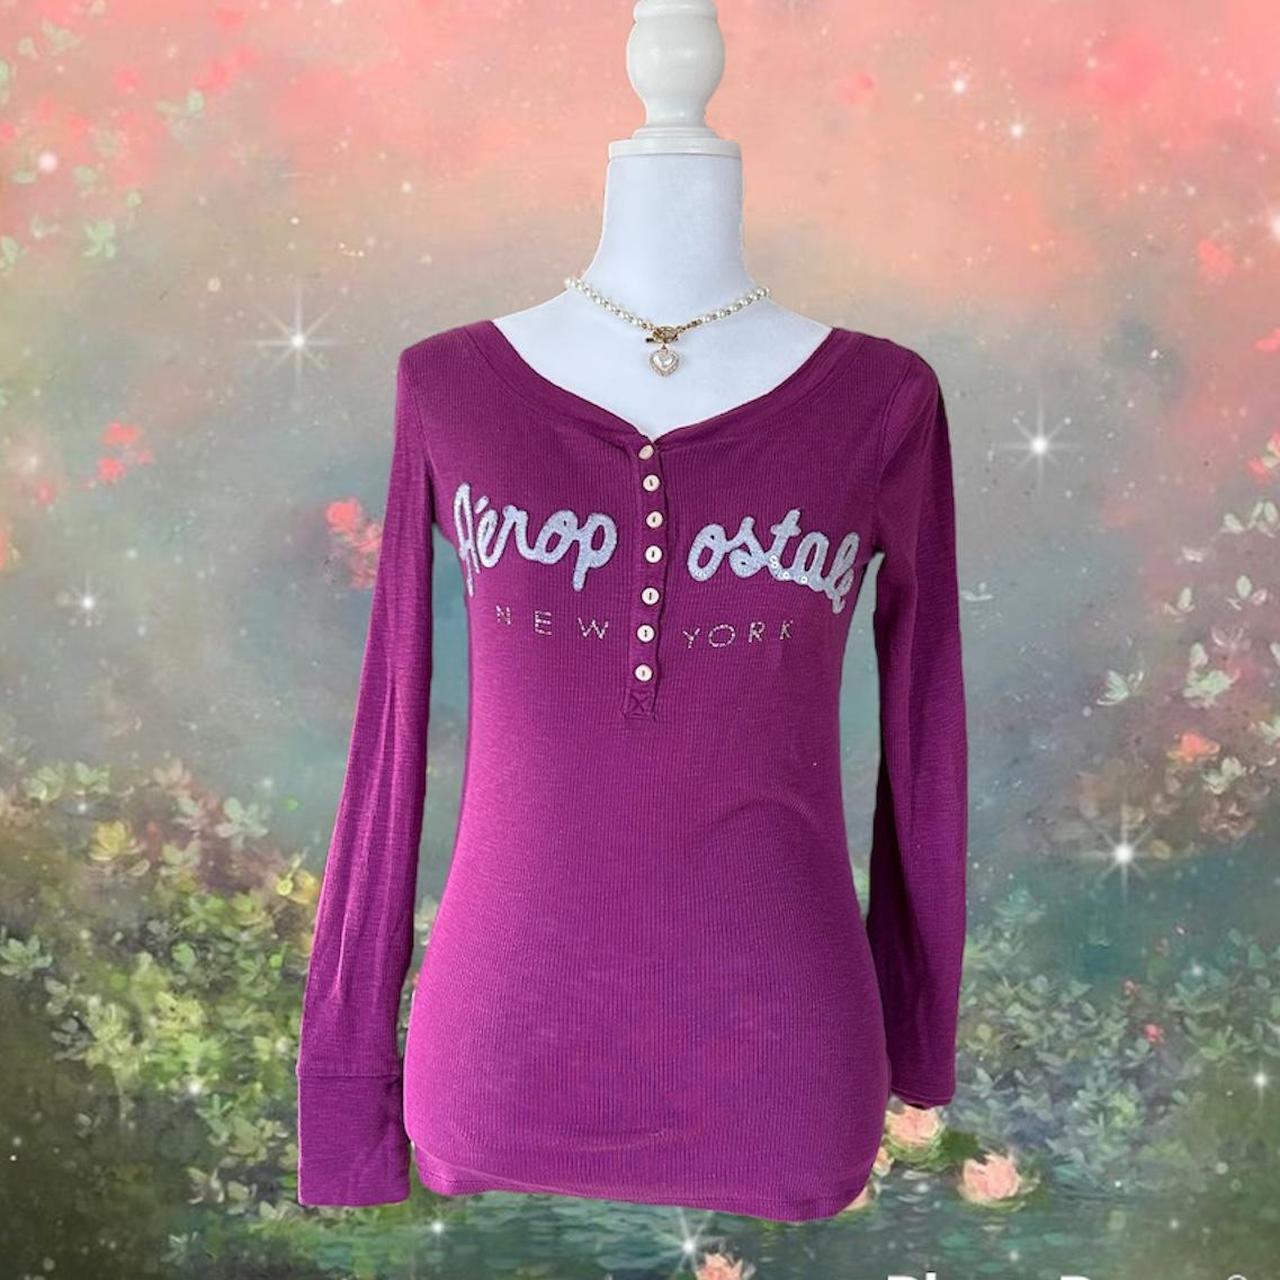 Aeropostale Women's Pink and Purple Shirt | Depop